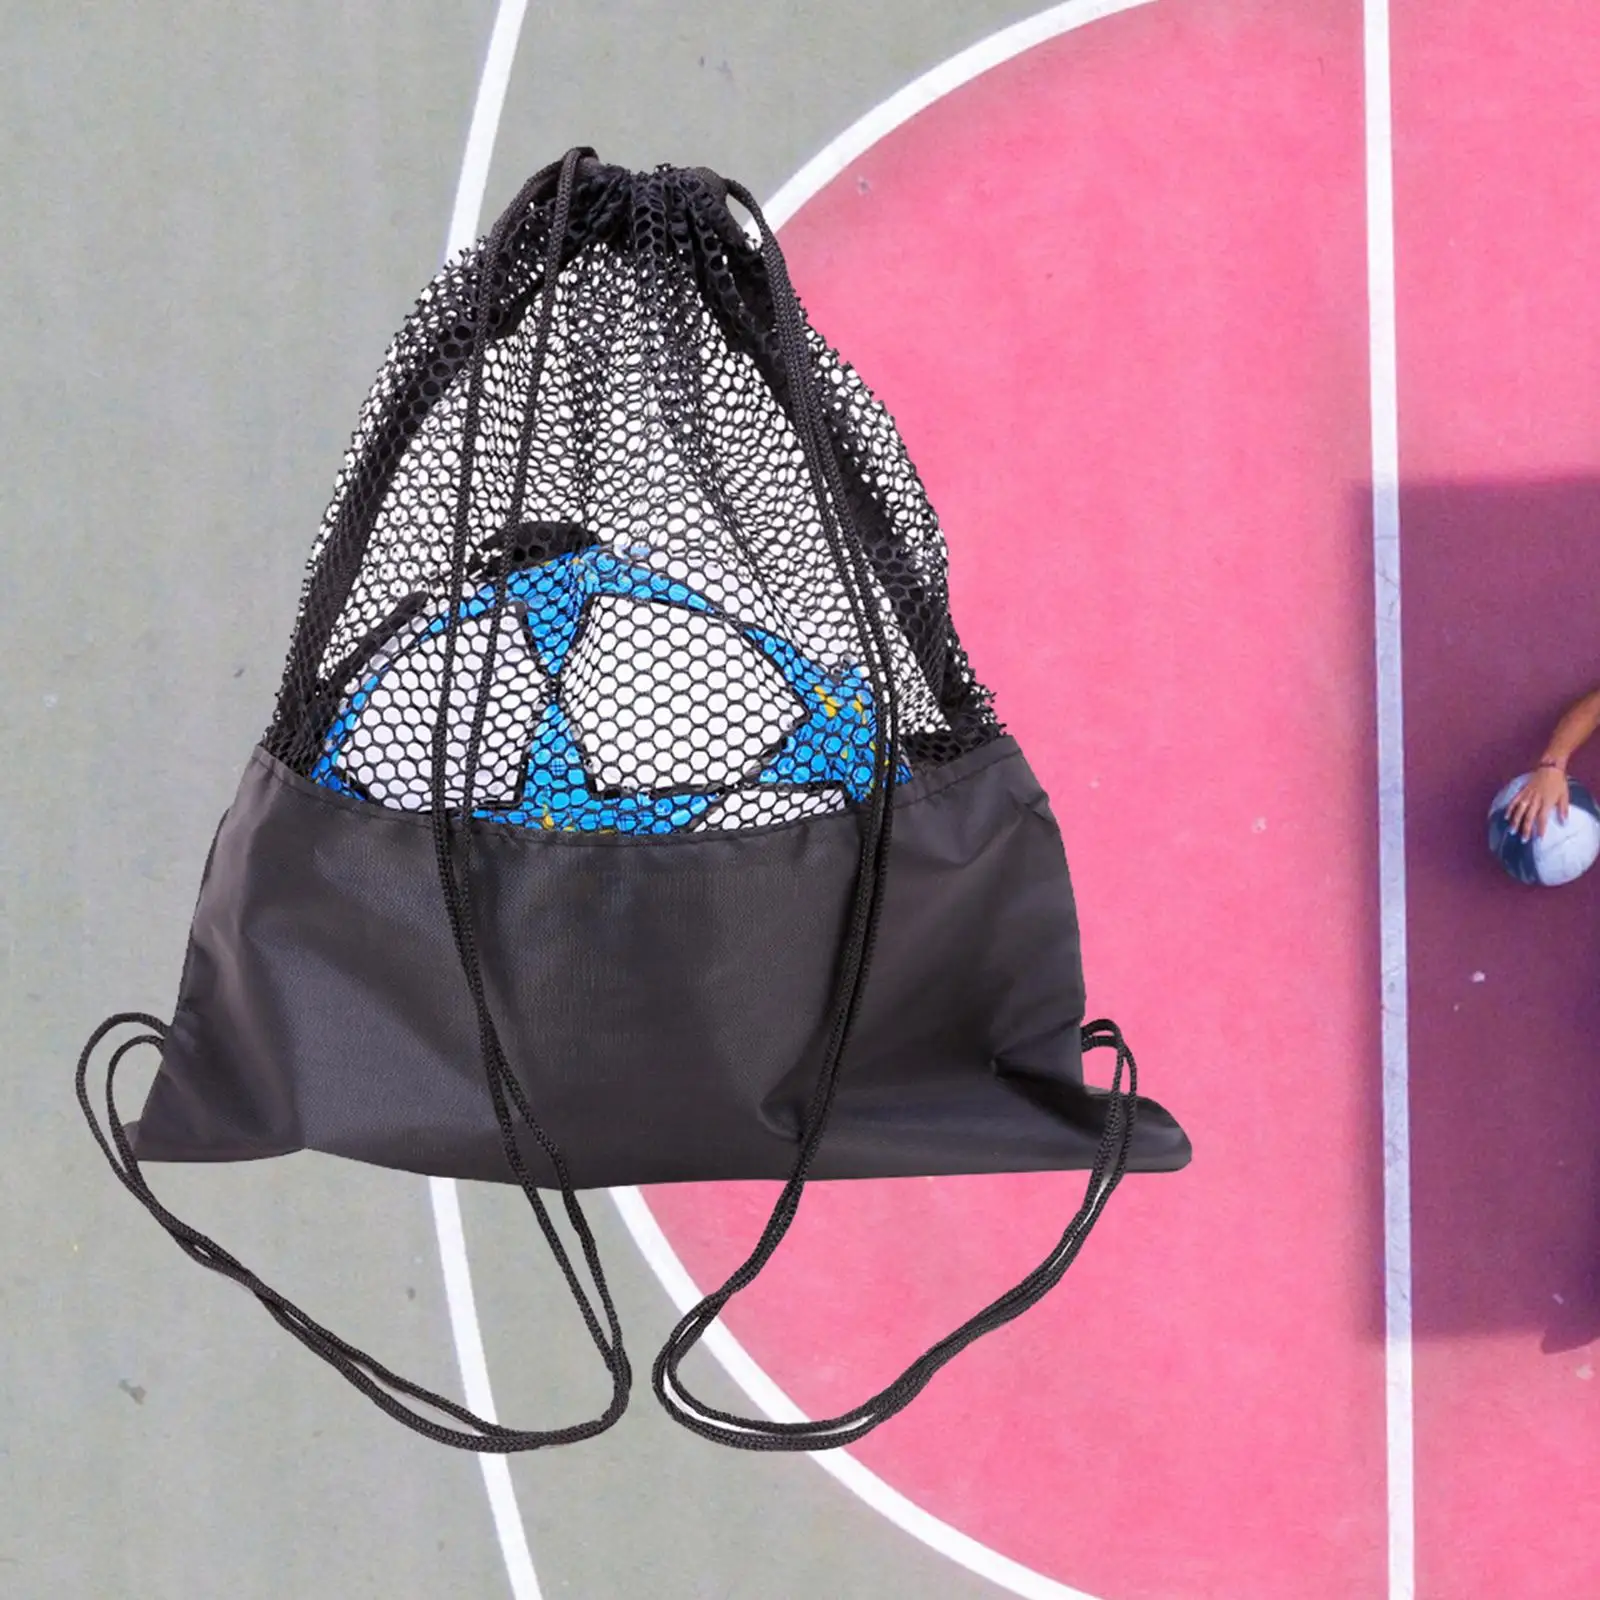 Basketball Mesh Bag Rucksack Wear Resistant Drawstring Backpack Sports Ball Carry Bag for Softball Yoga Swimming Traveling Dance